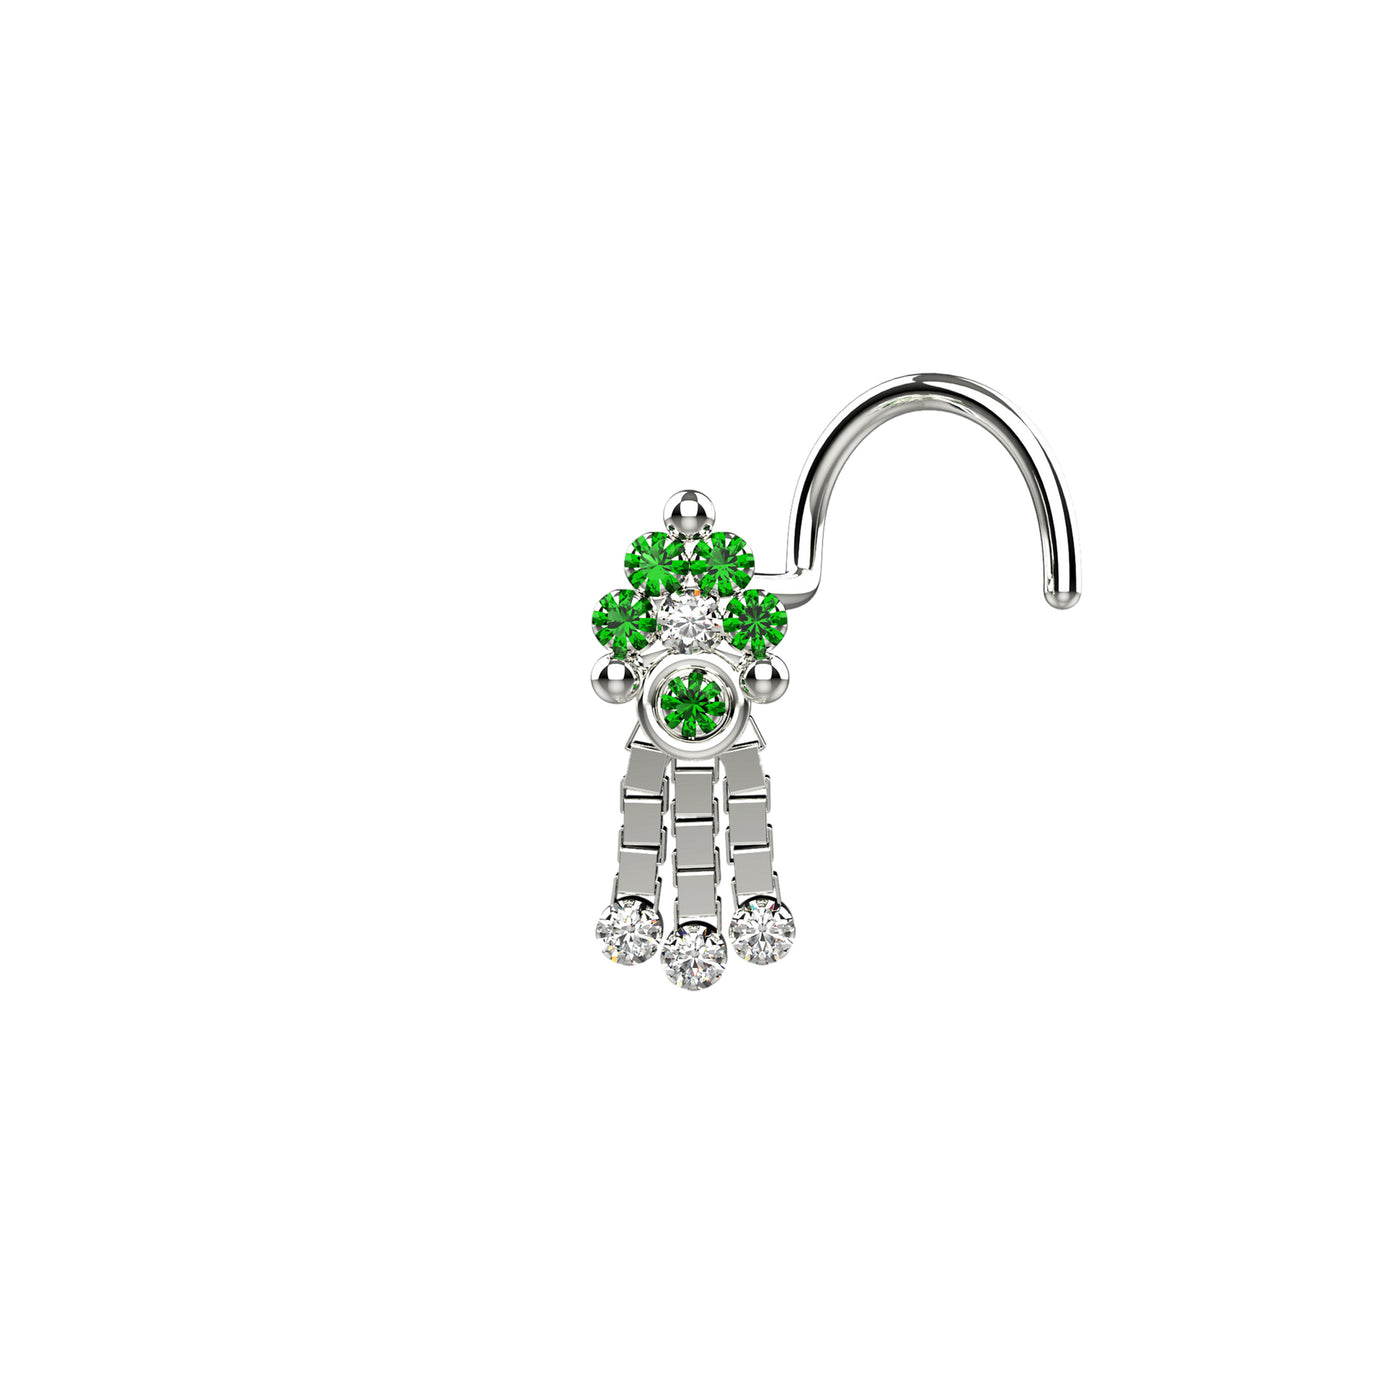 Emerald Stone Prong Dangle Chain Nose Stud